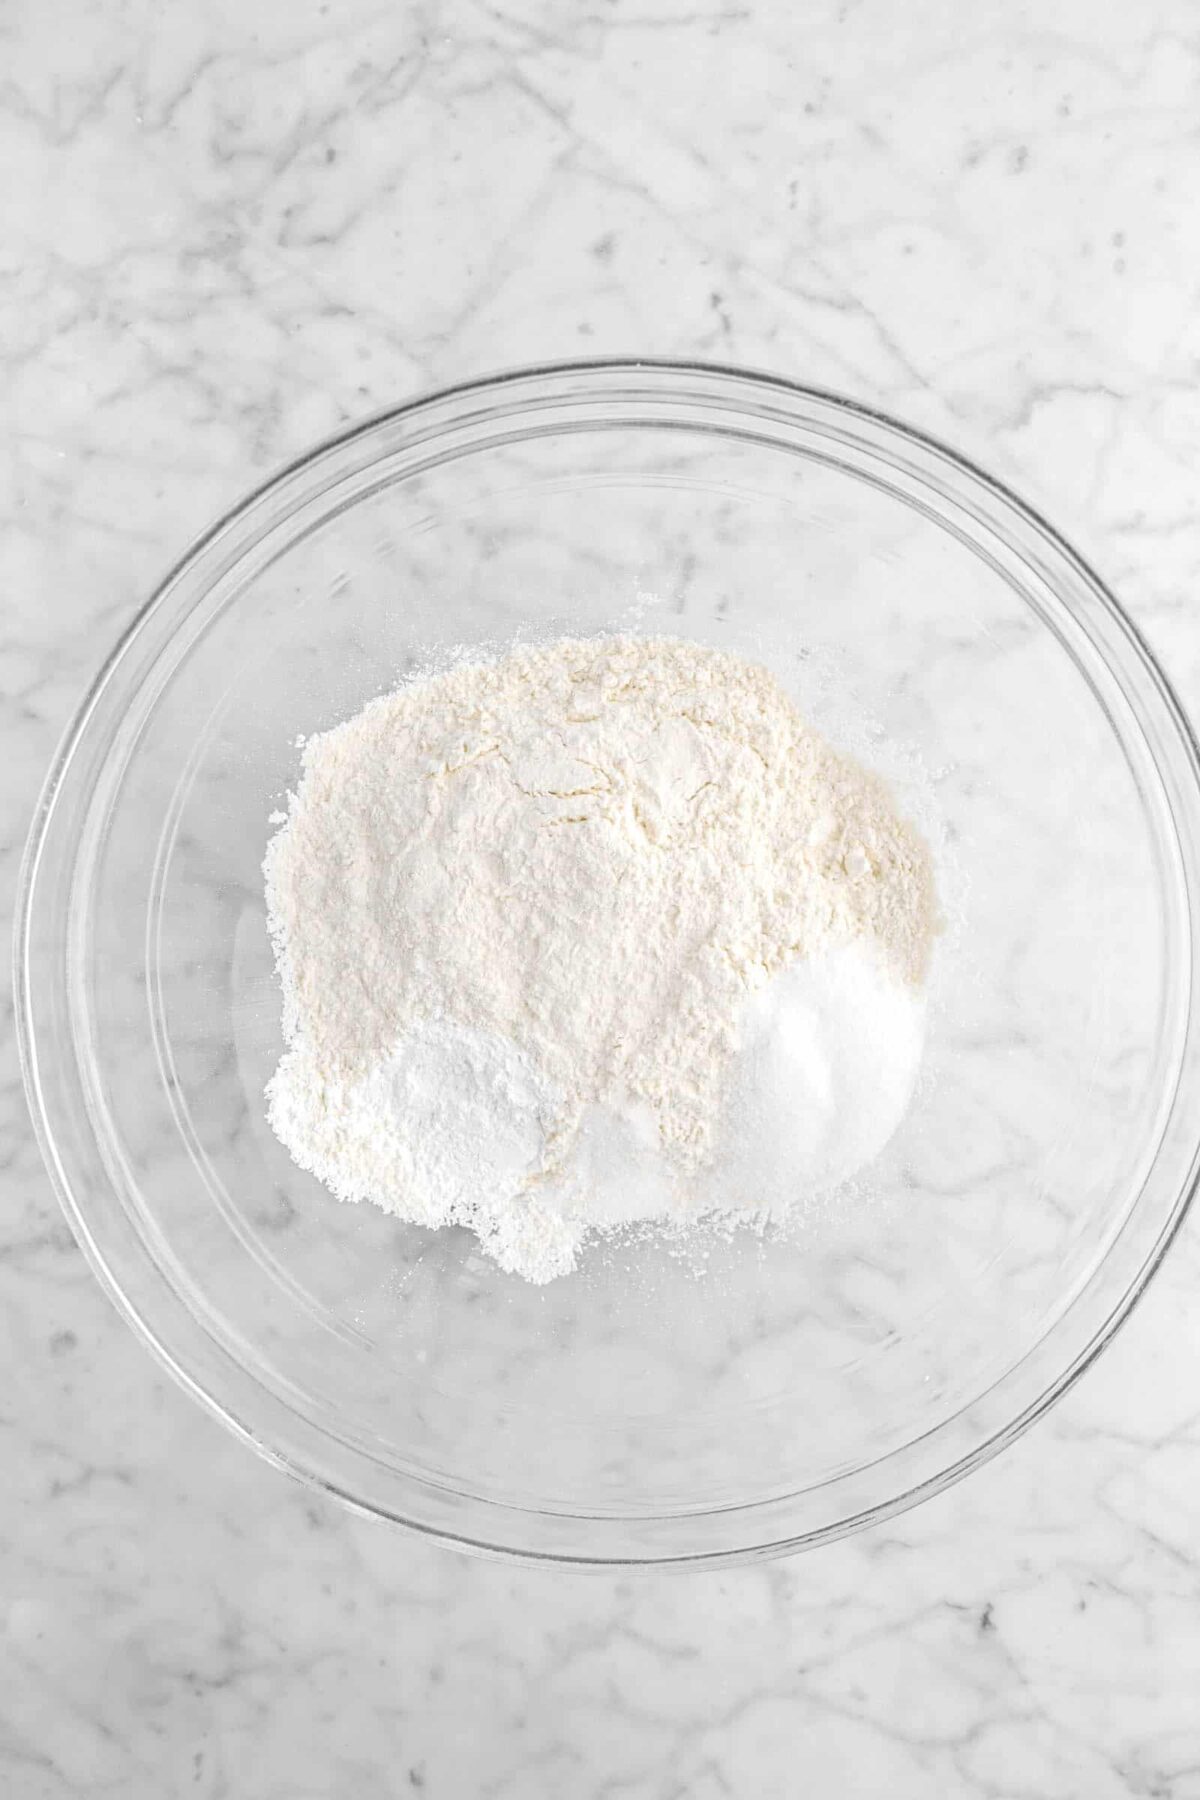 flour, baking powder, salt, and sugar in glass bowl